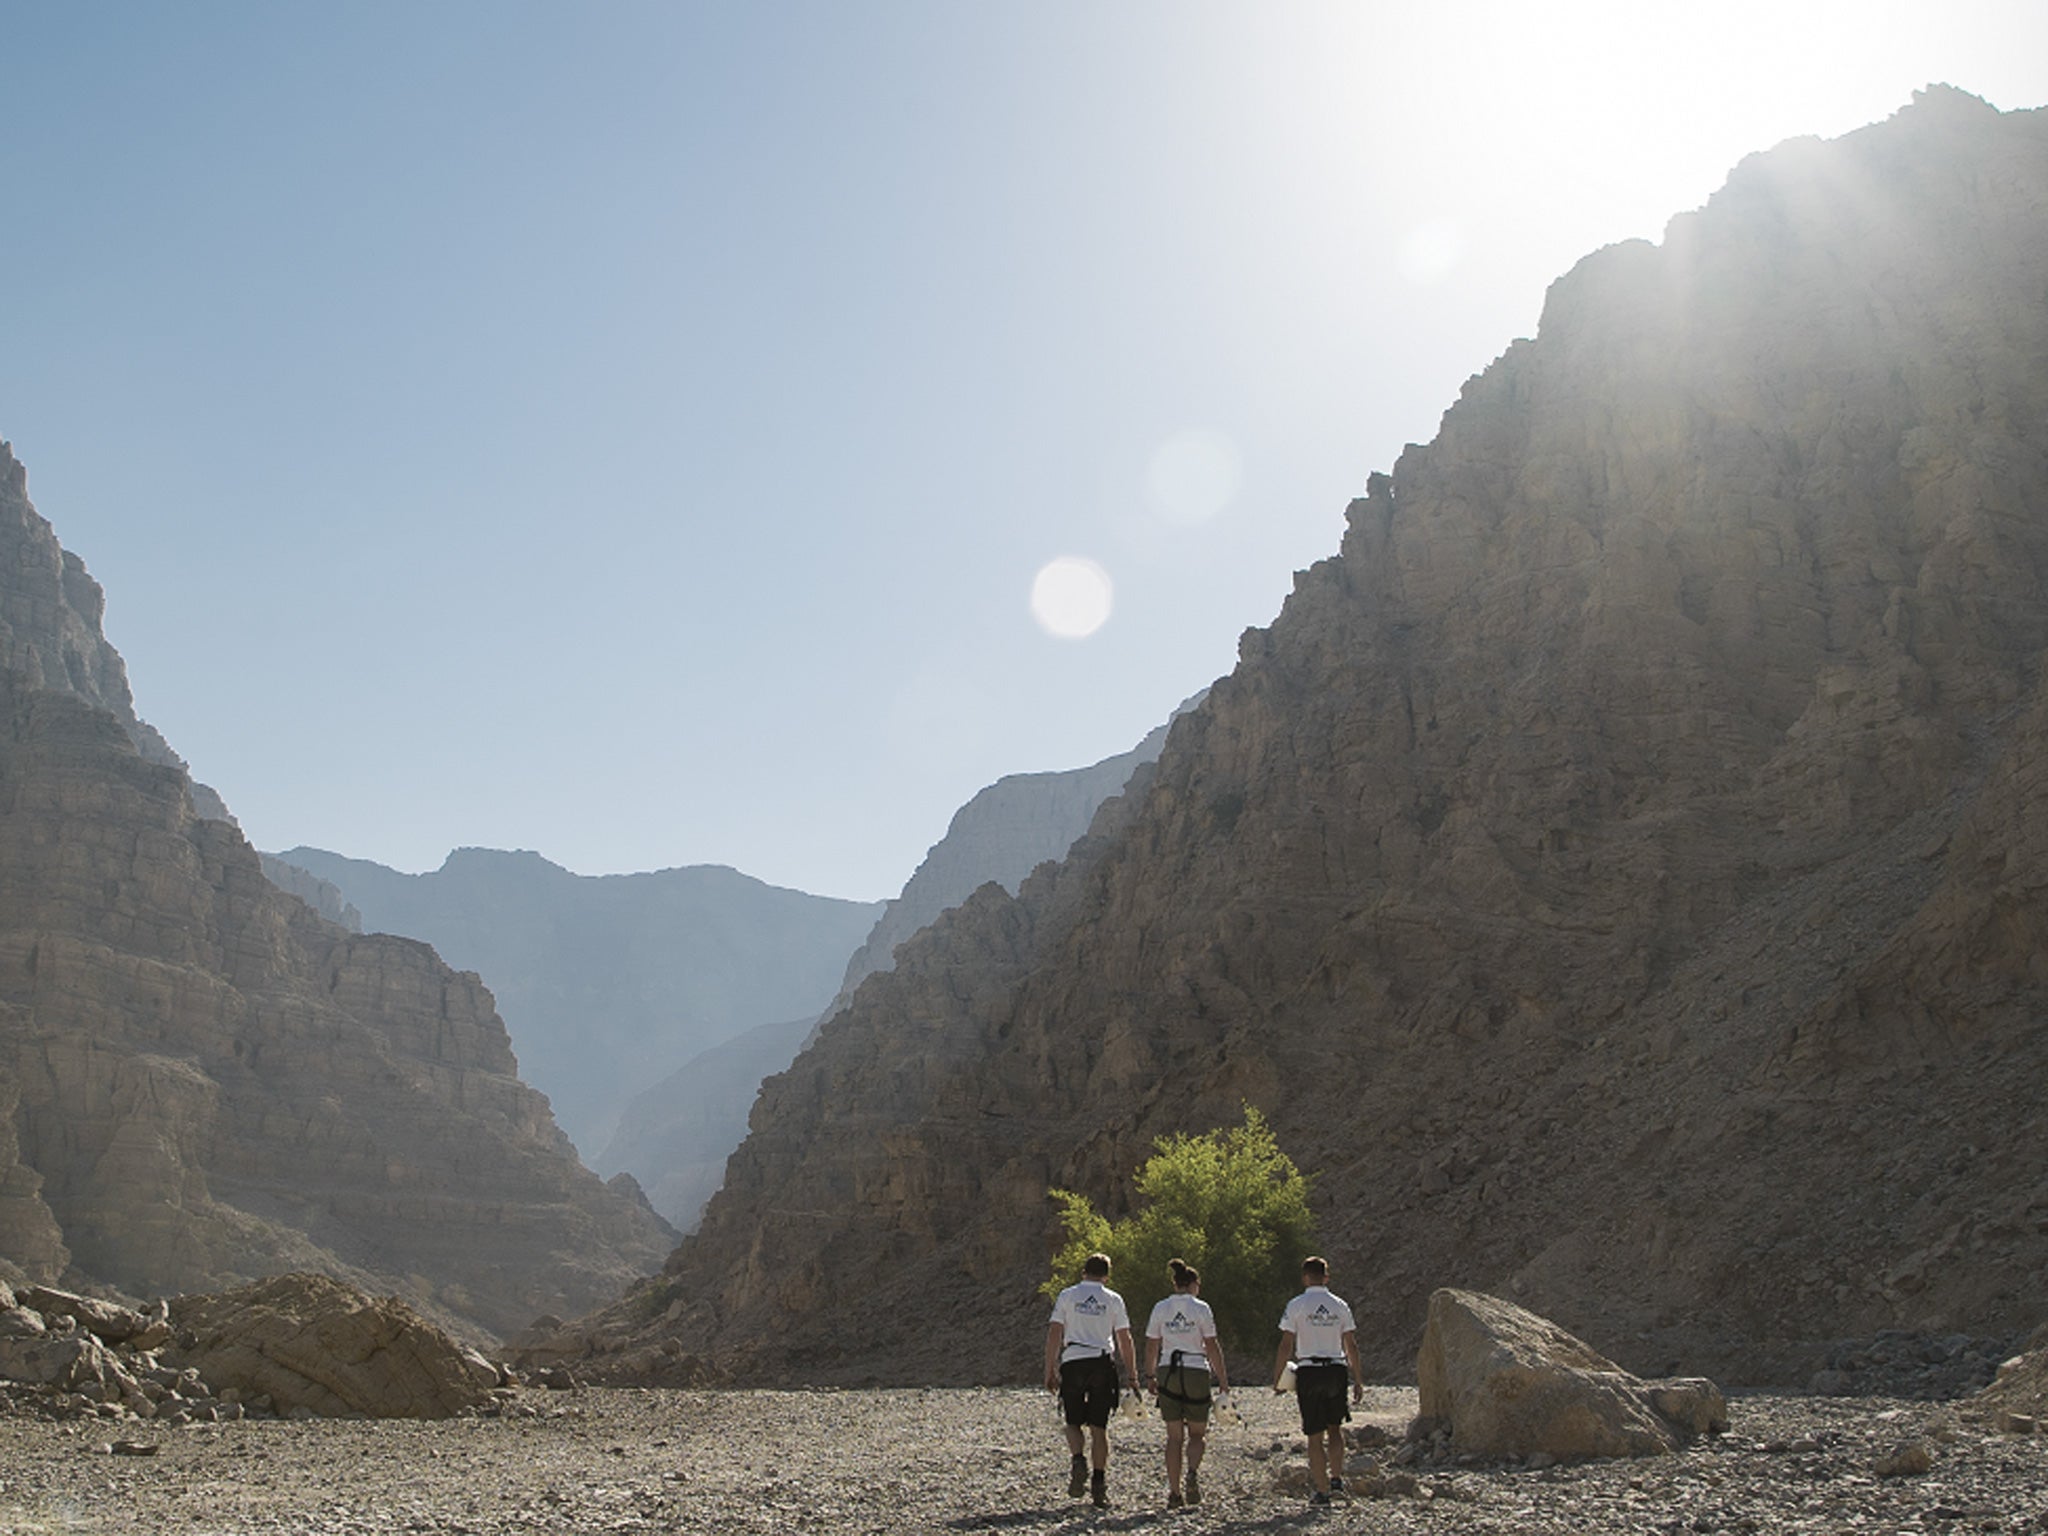 Jebel Jais in the Hajar range is increasingly popular with adventure travellers in the UAE